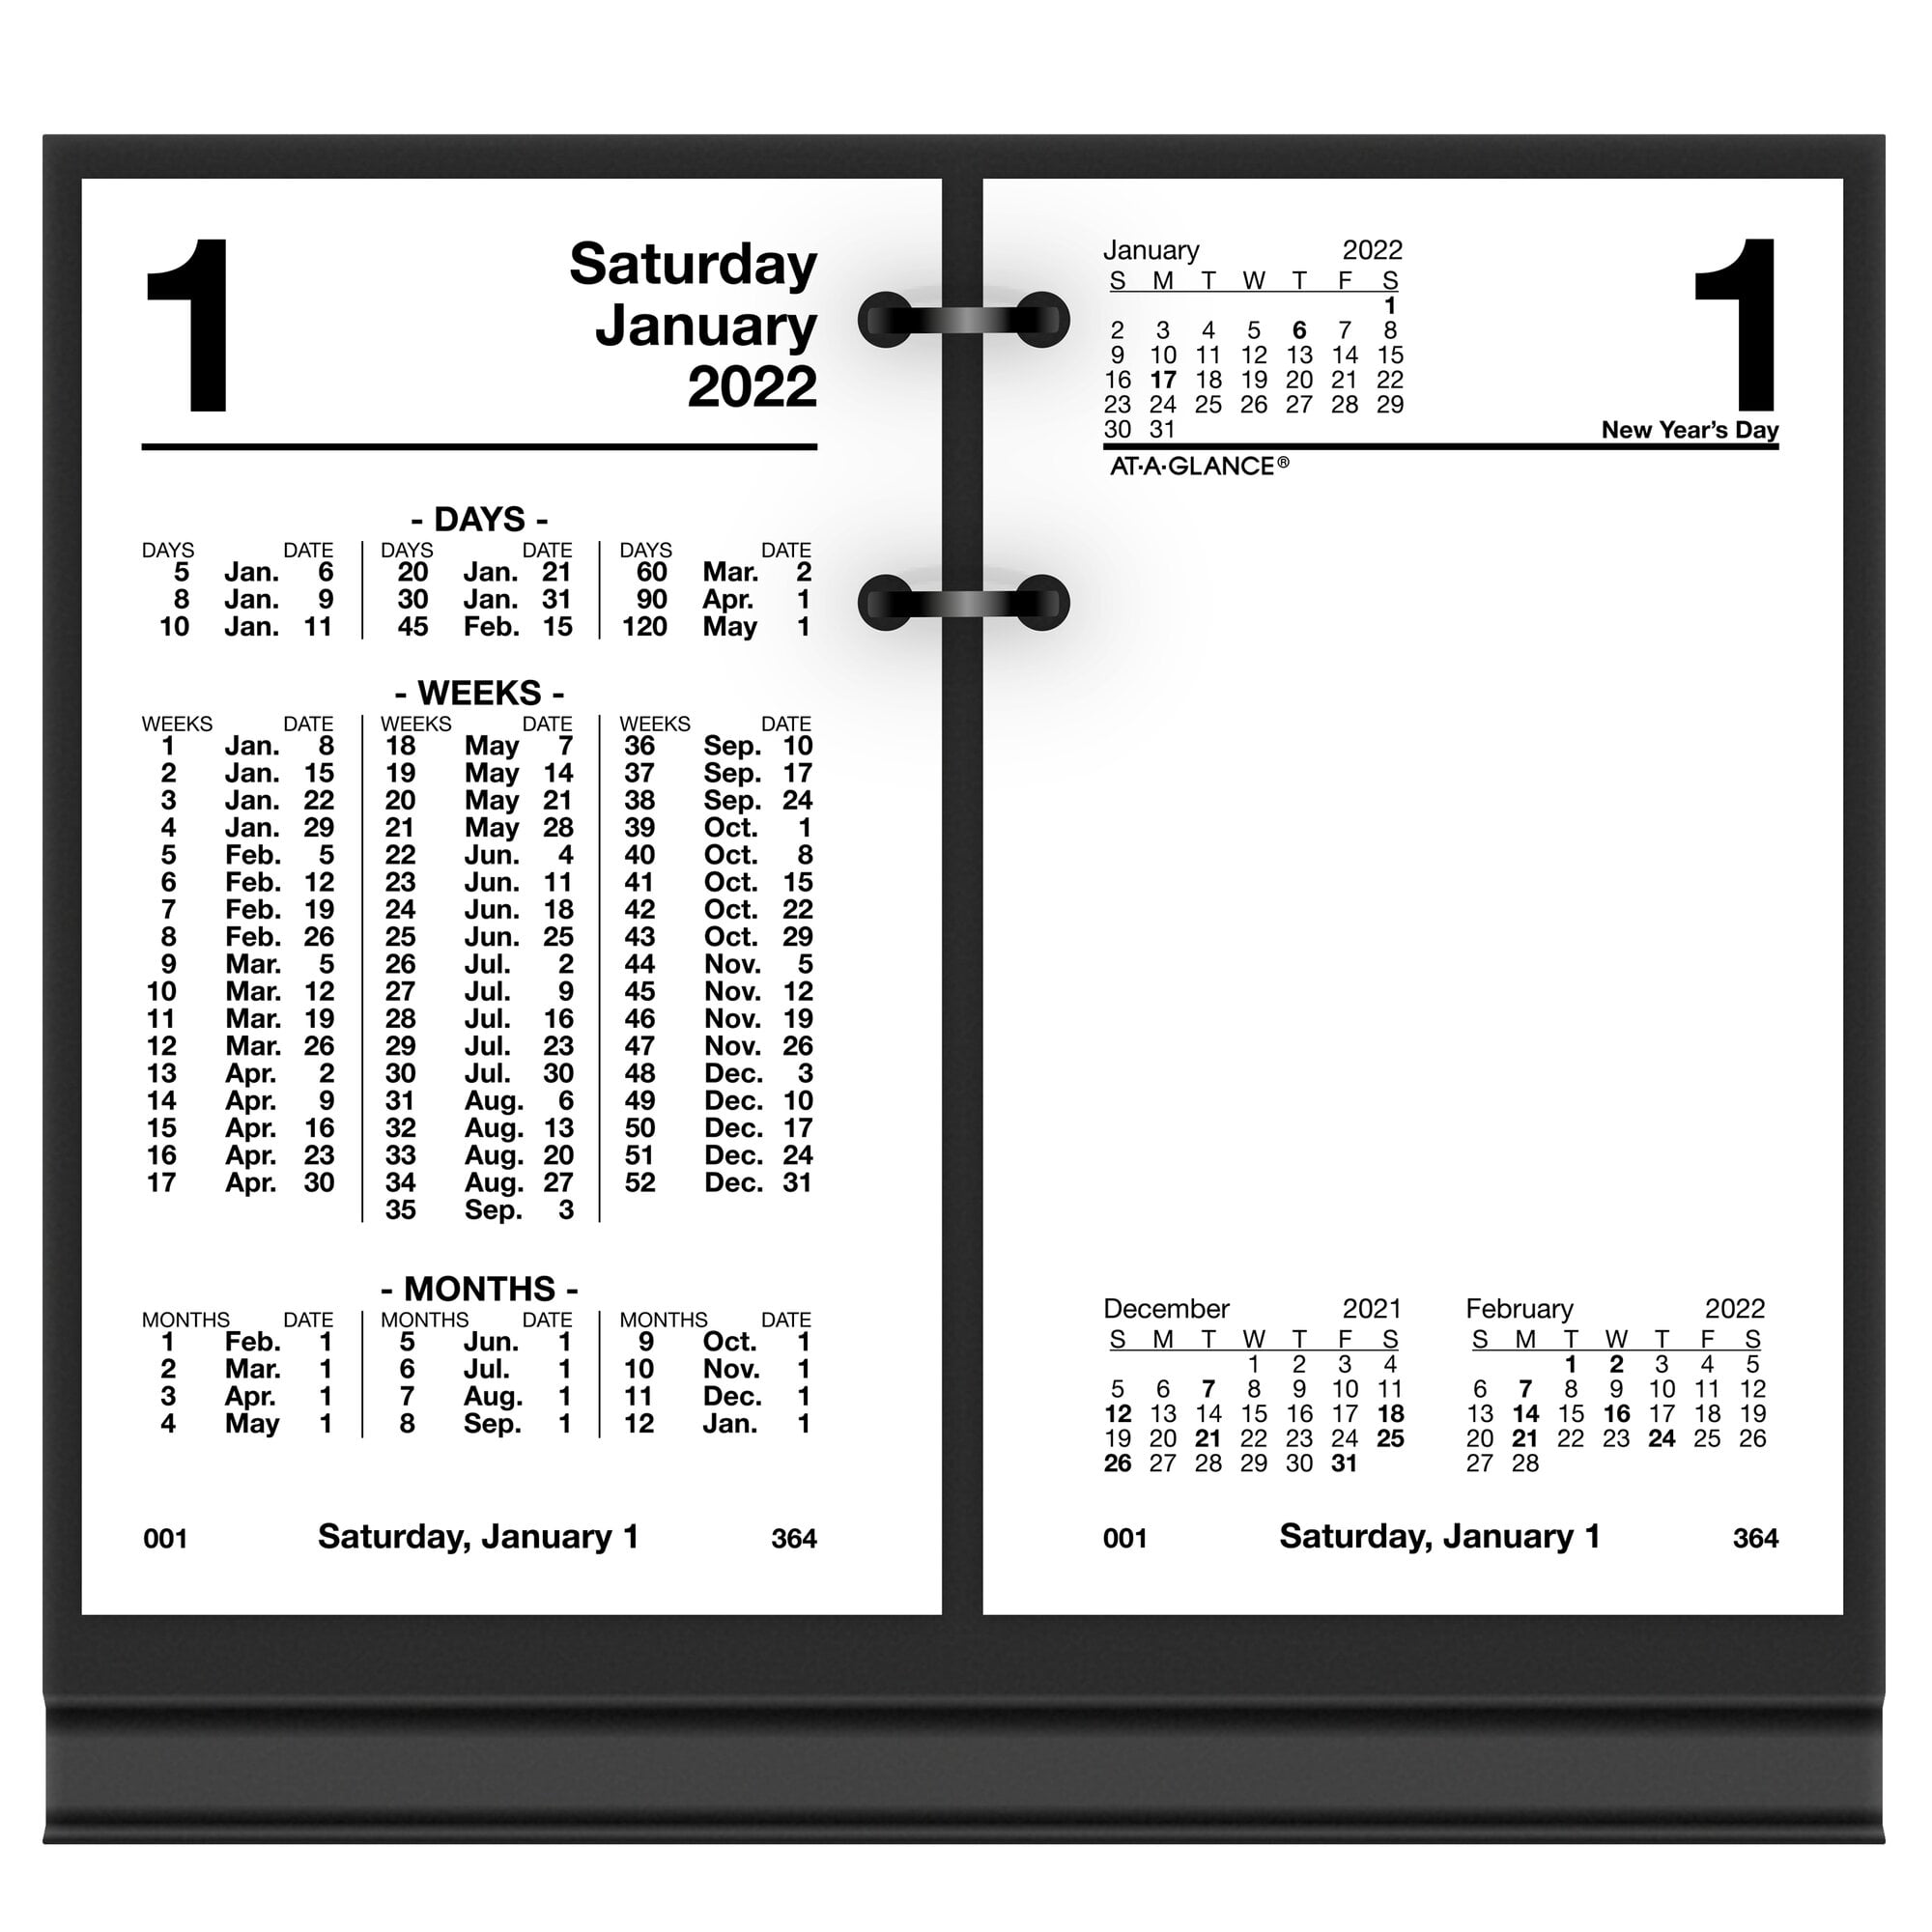 At A Glance Financial Daily Desk Calendar Refill 3 1 2 X 6 January 2022 To December 2022 S1705022 Walmart Com